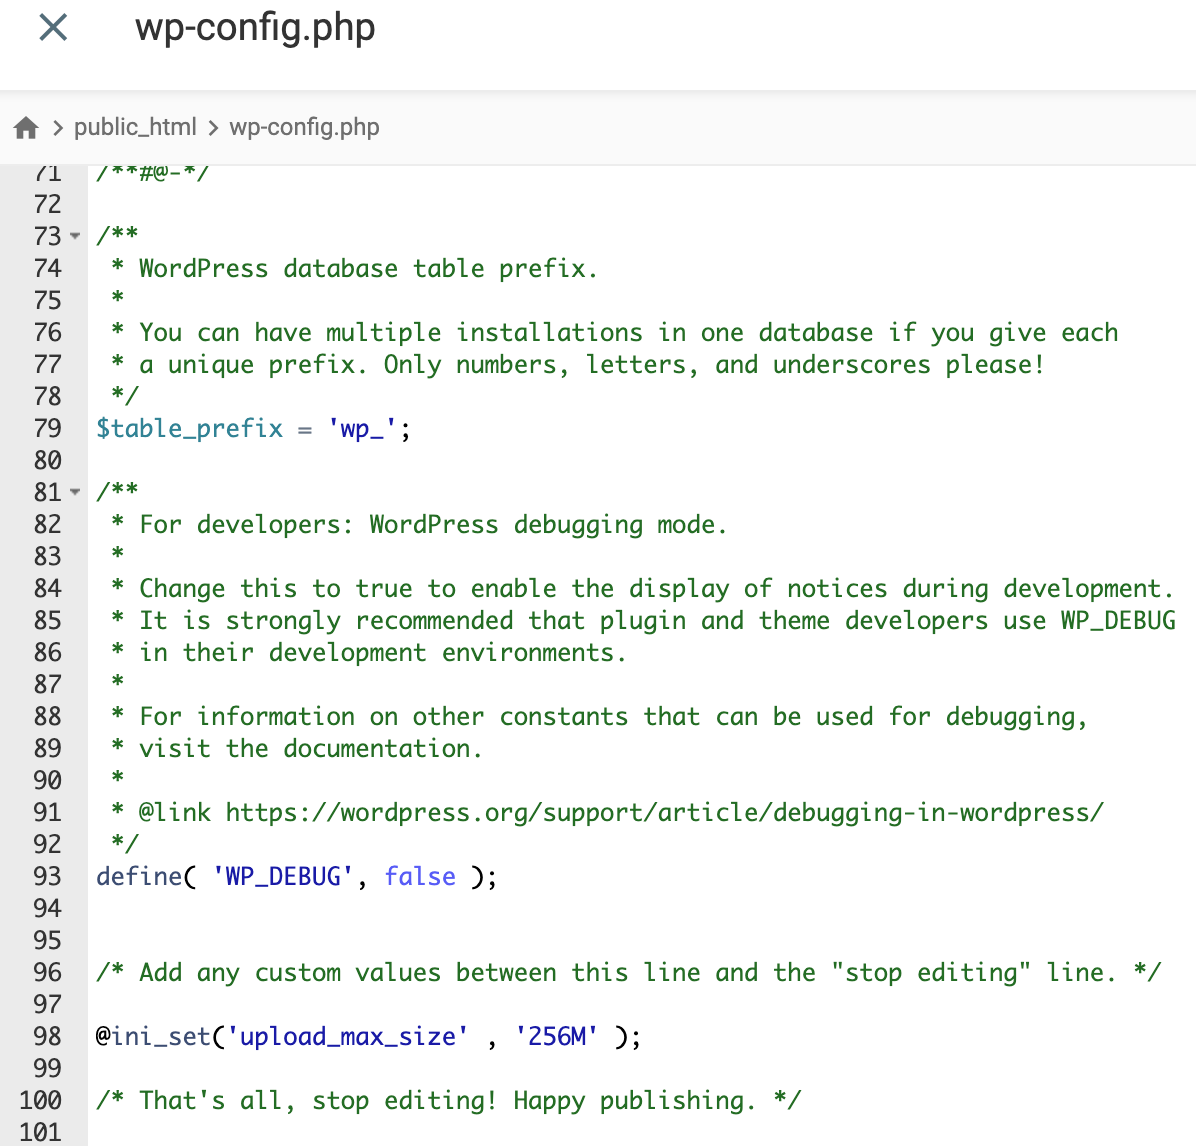 O arquivo wp-config.php. A linha Upload max size foi adicionada